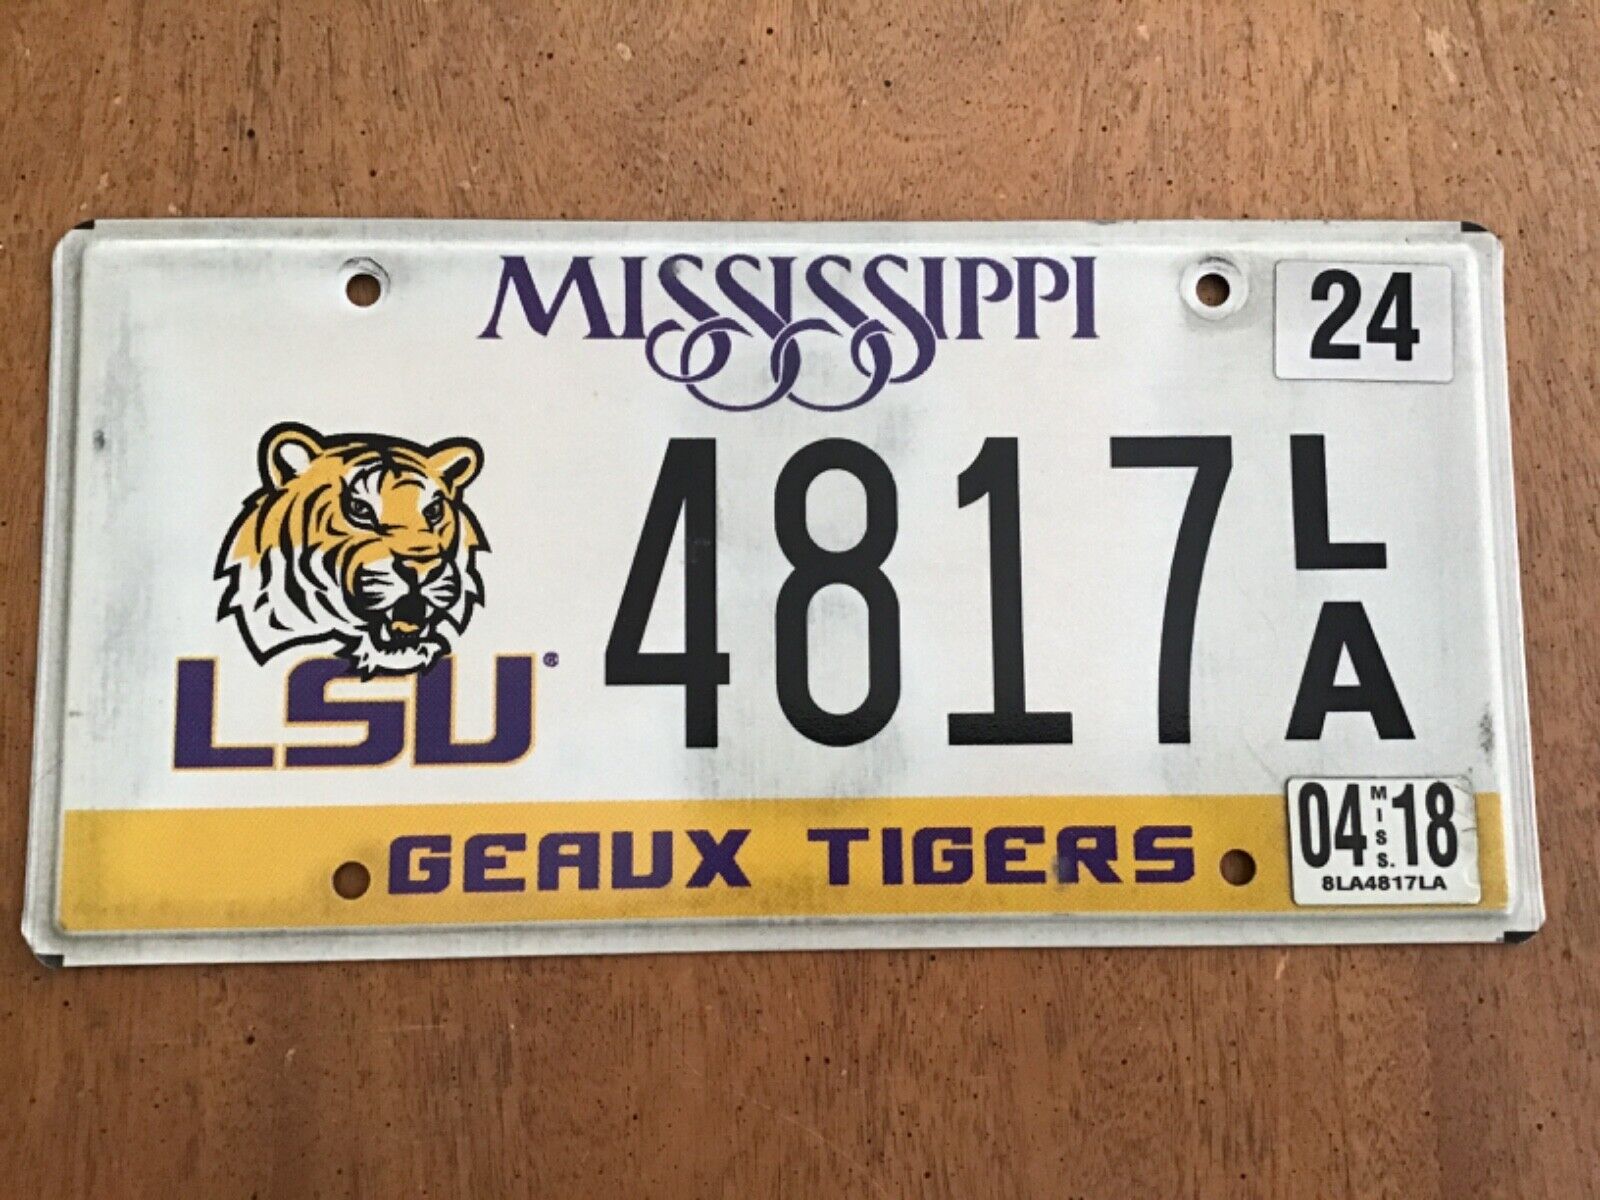 2018 Mississippi LSU License Plate Tag 4817LA Tigers Louisiana State University